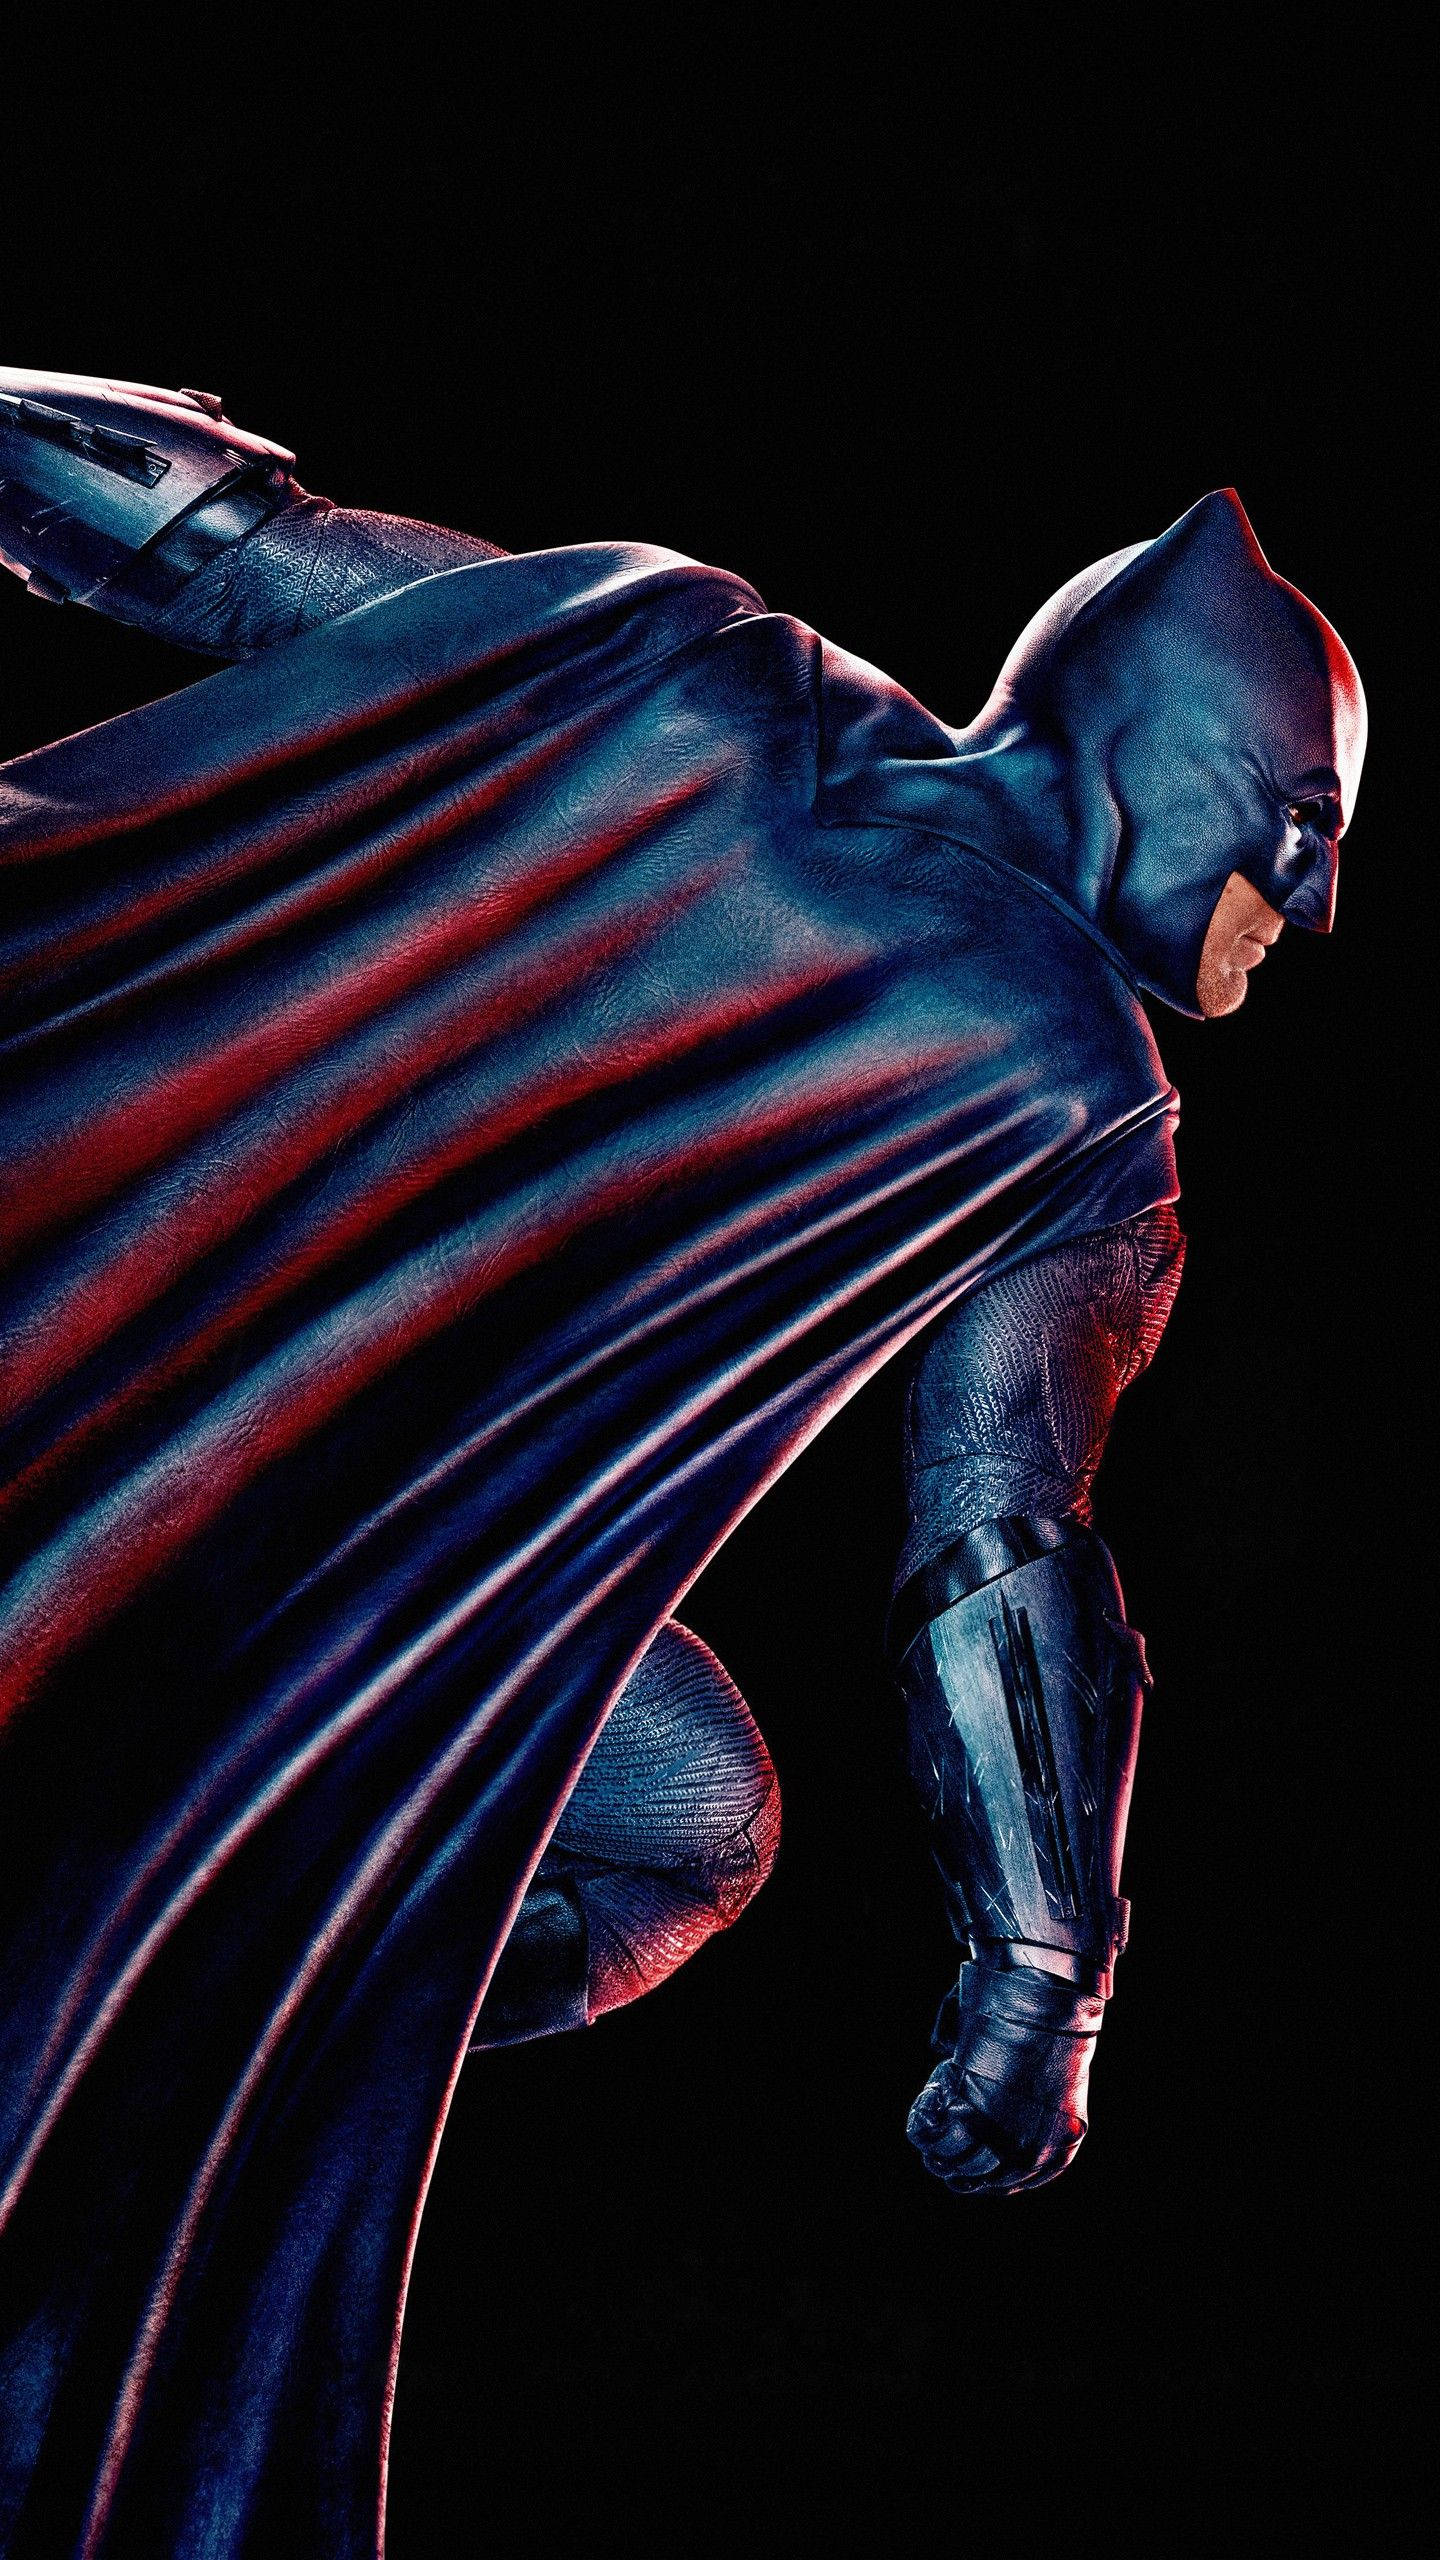 Batman vs Superman: Dawn of Justice 2016 iPhone & Desktop Wallpapers HD